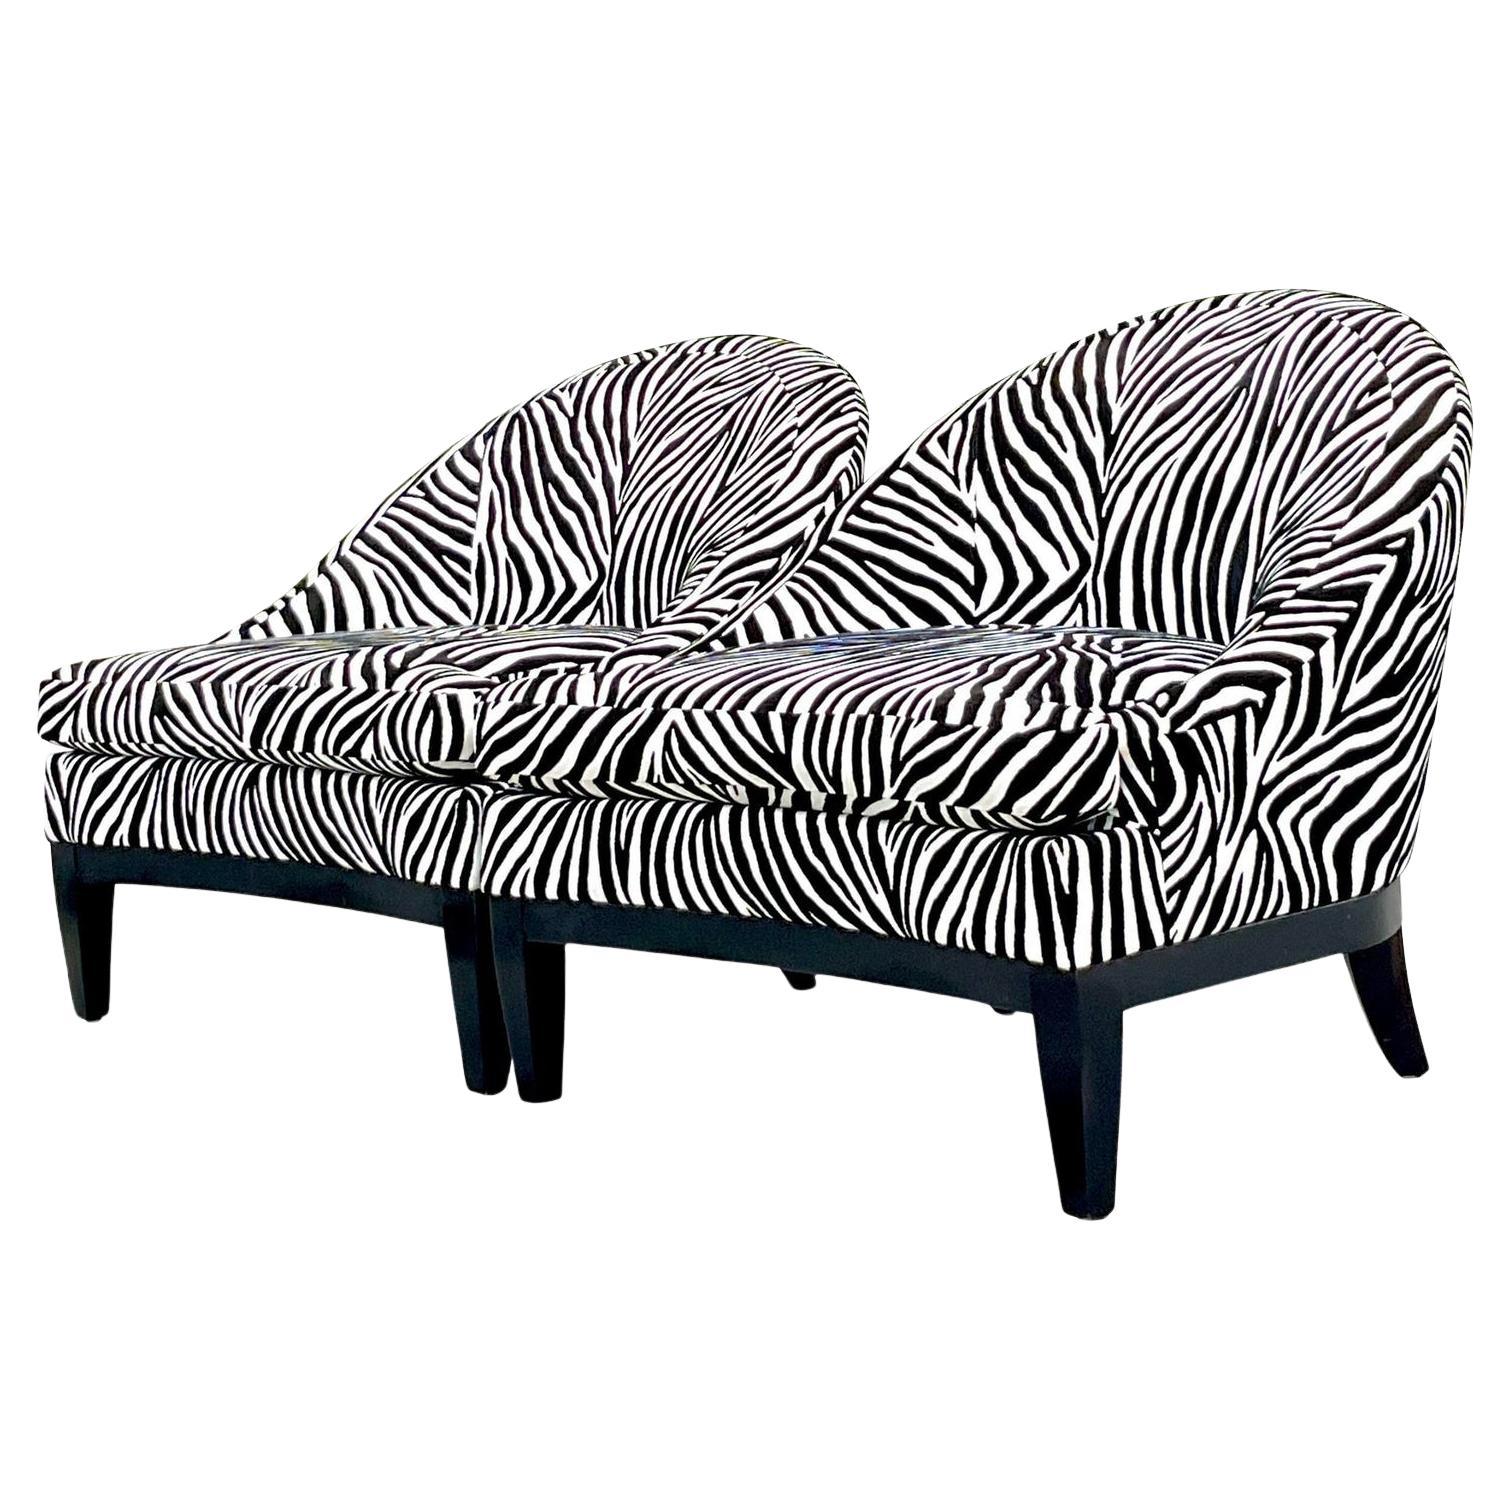 Vintage Boho Low Slung Zebra Lounge Chairs - a Pair For Sale